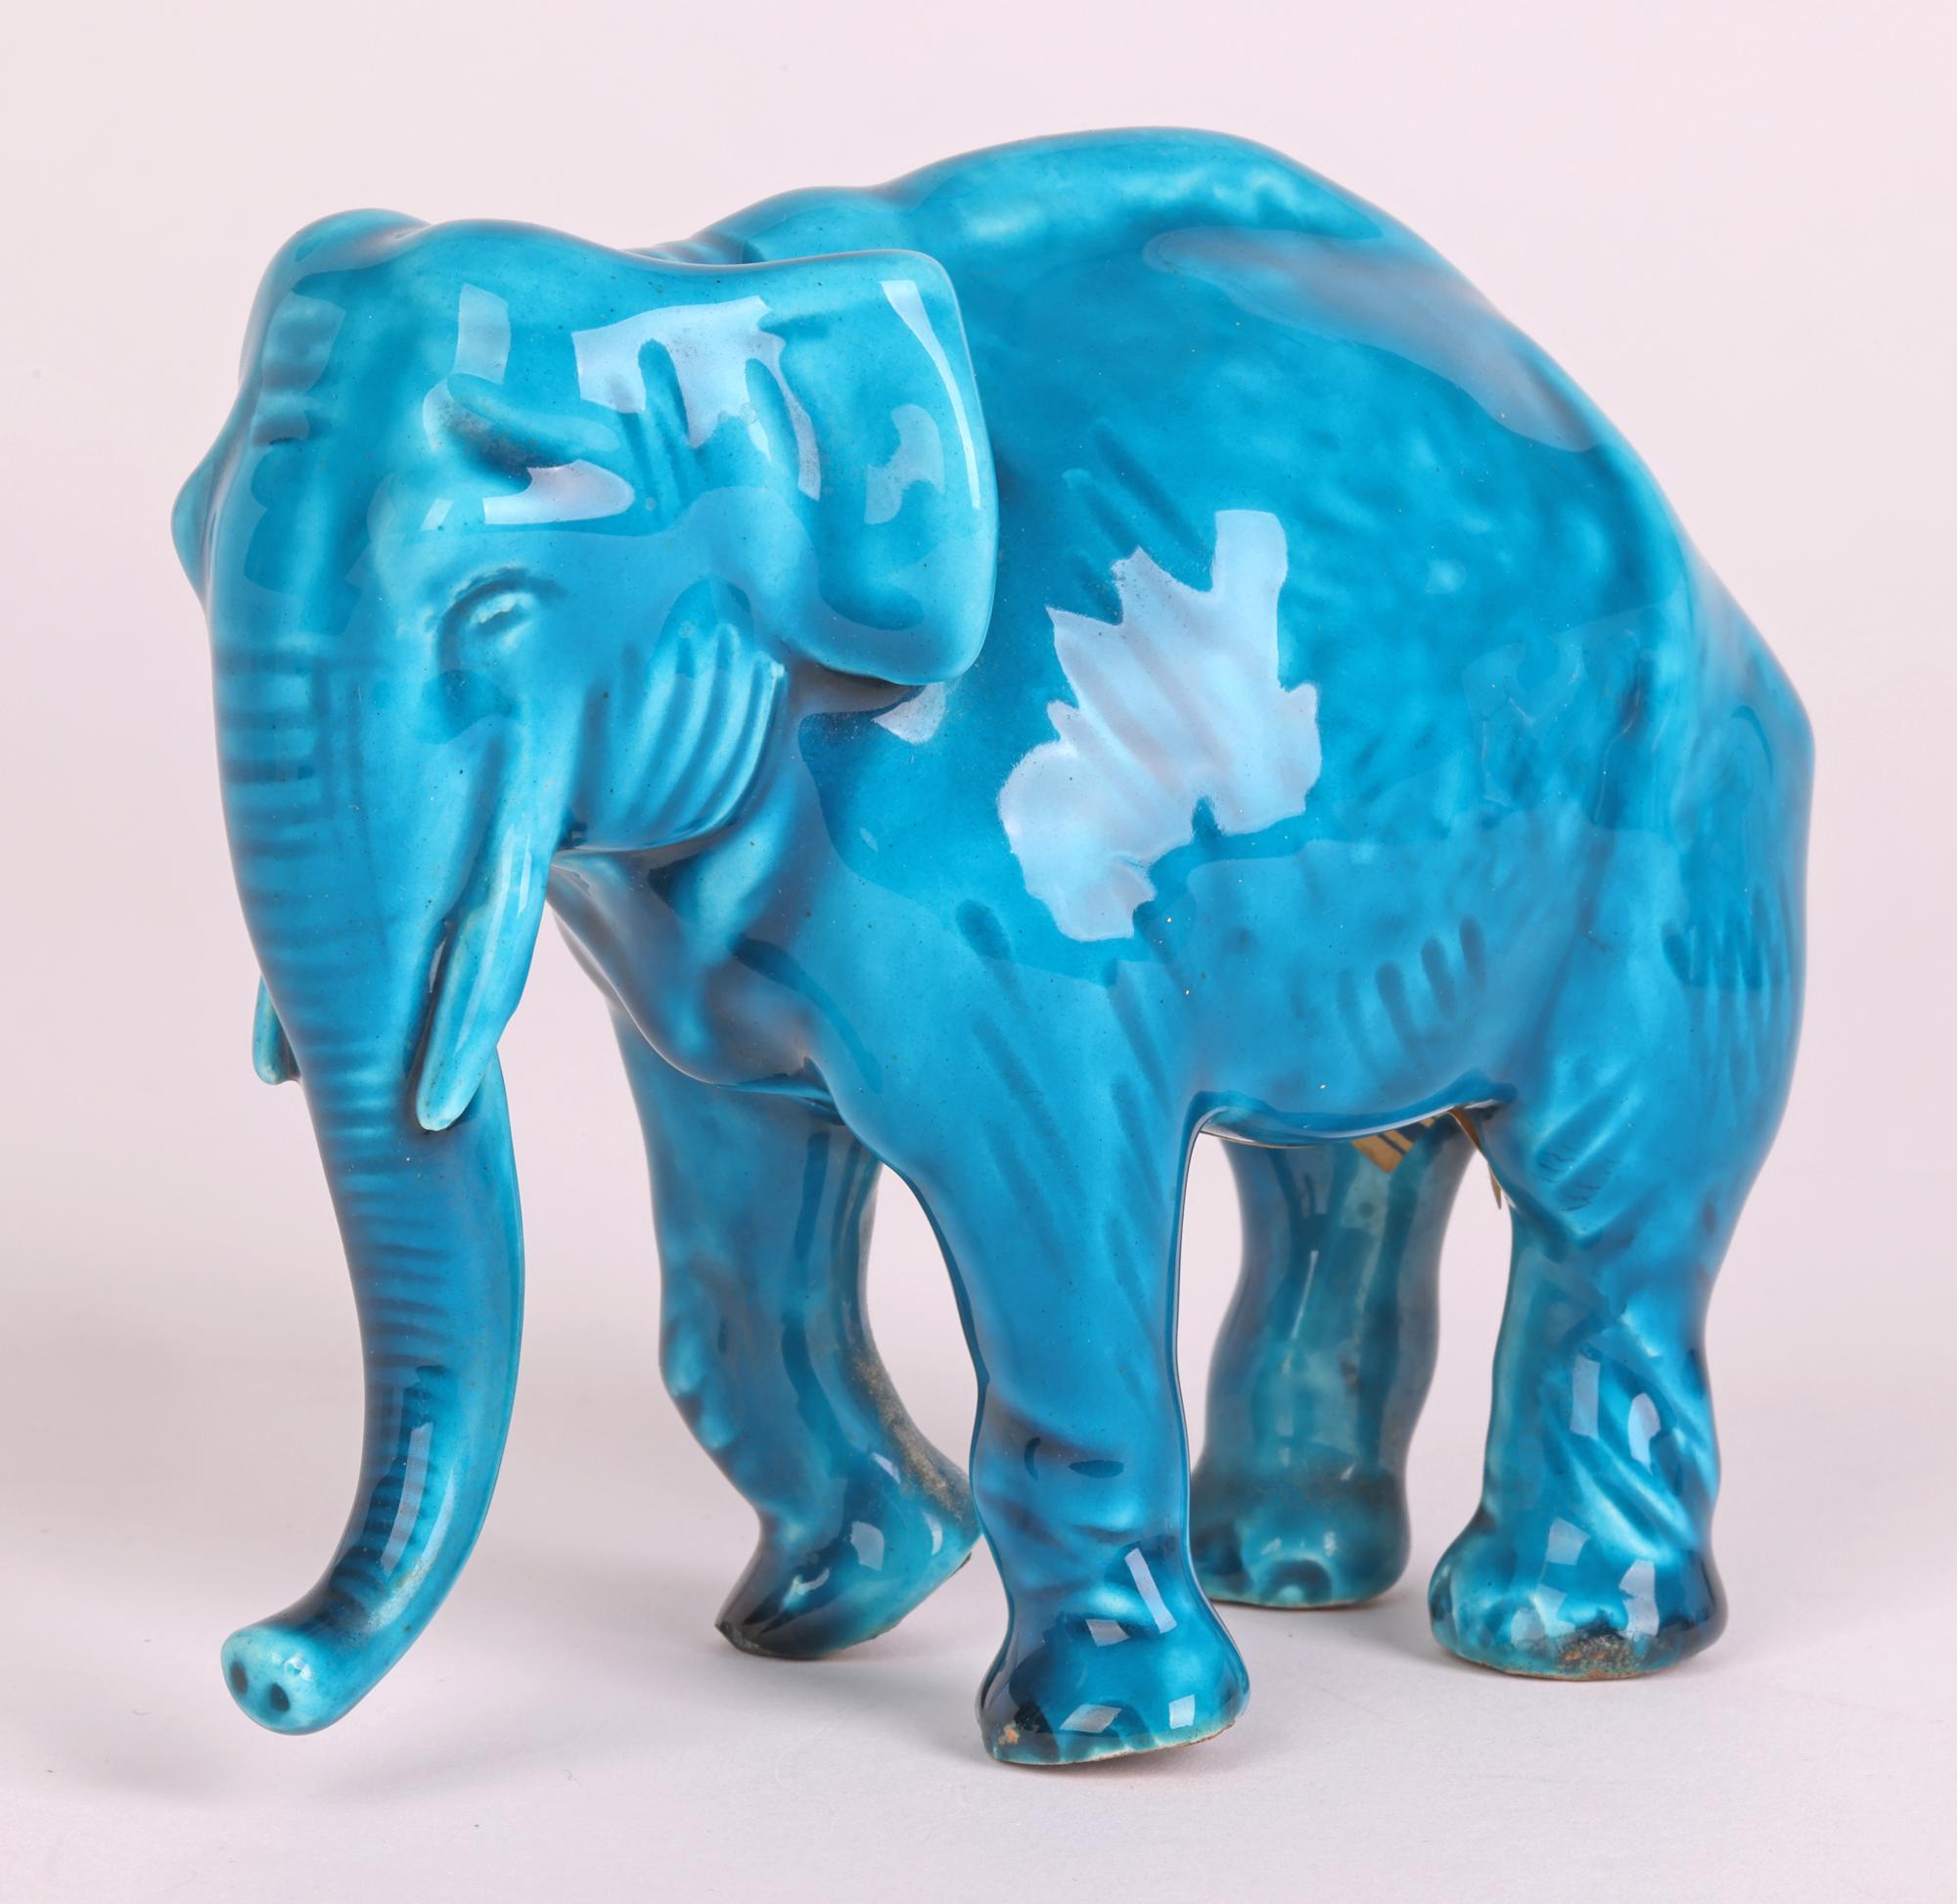 Paul Milet Sevres Turquoise Glazed Ceramic Elephant Figure    For Sale 7